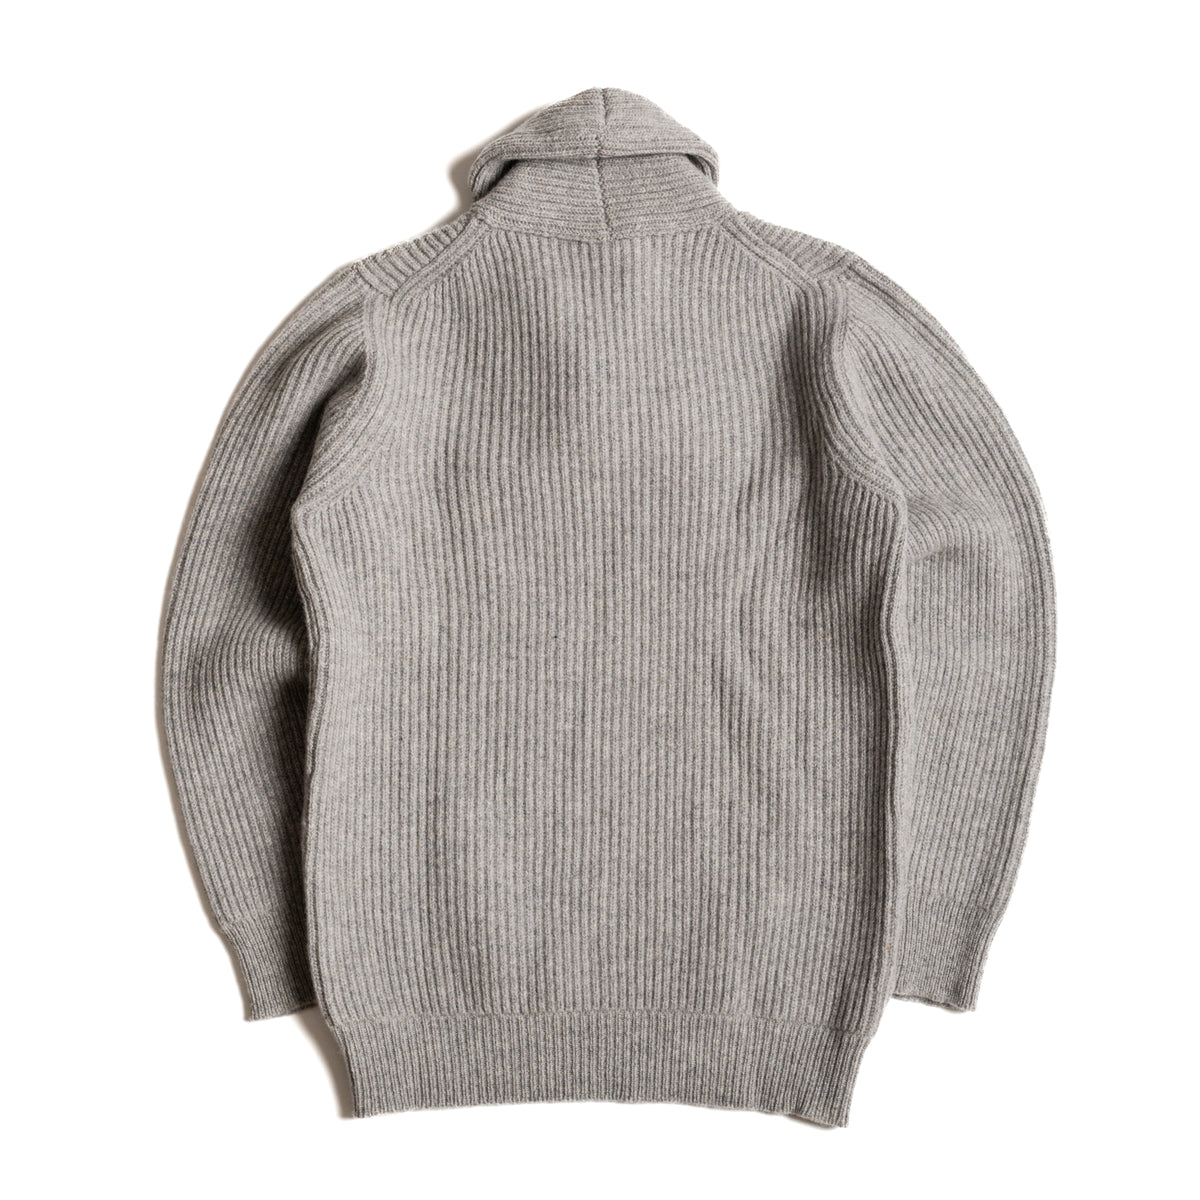 Flannel Grey Lambswool Shawl Collar Sweater